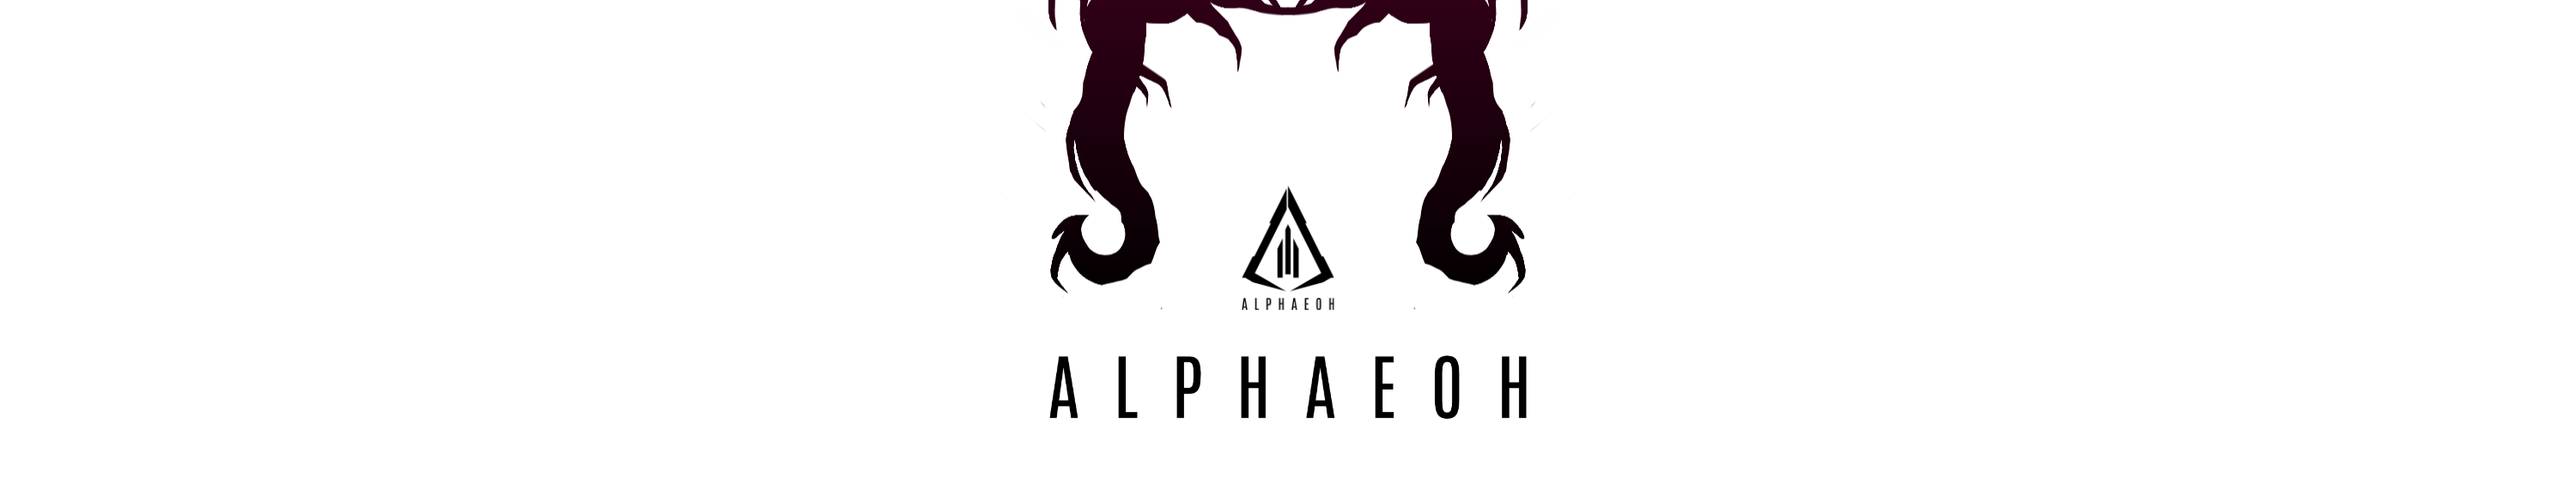 Alpha Eoh's profile banner